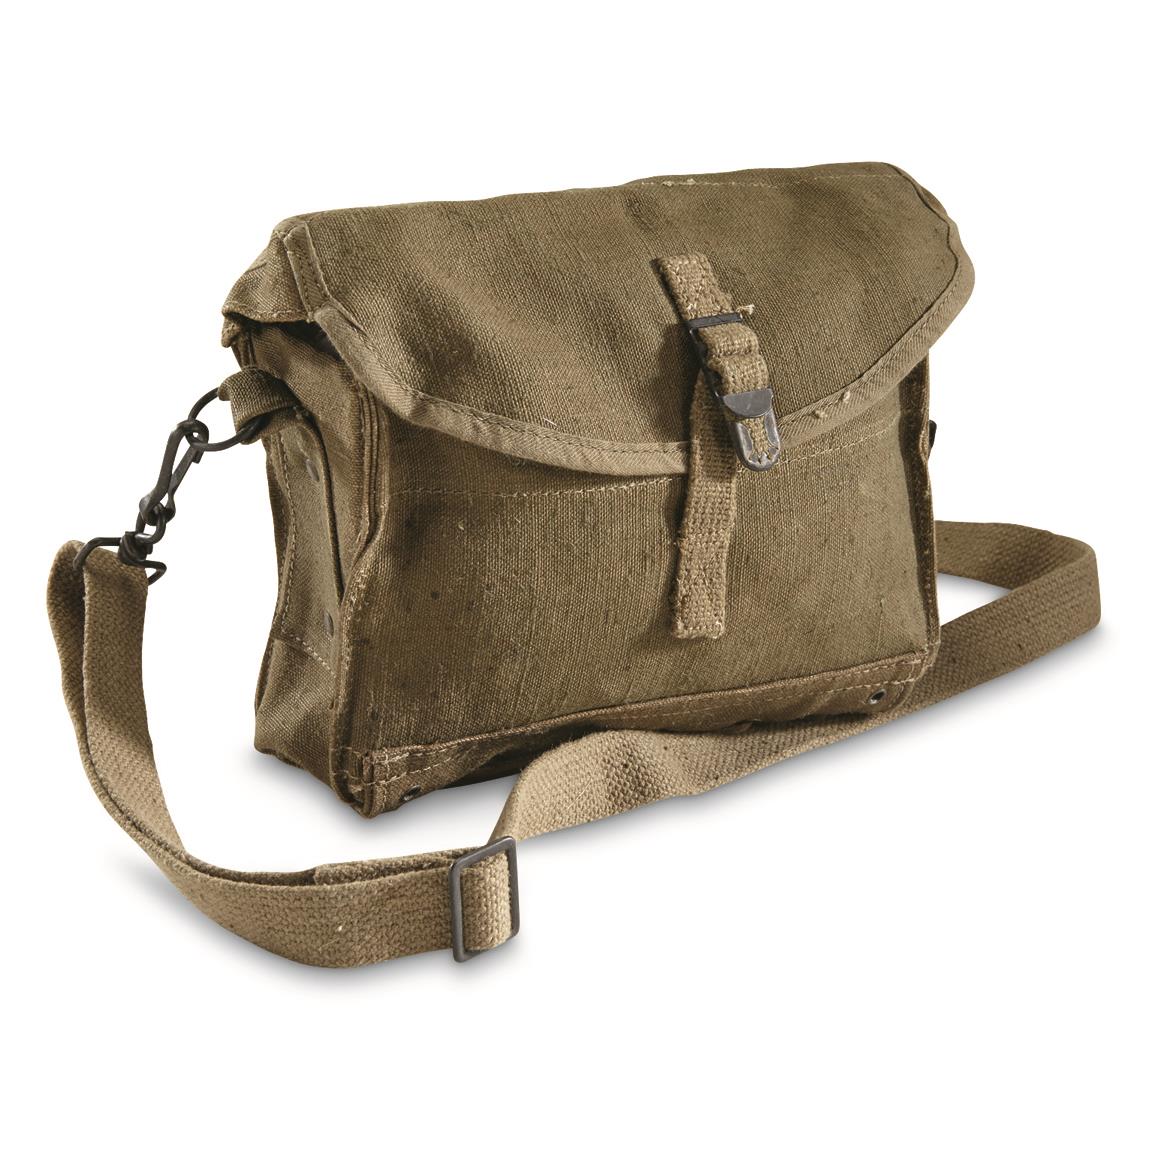 French Military Surplus Canvas Shoulder Bag, Like New - 679551, Rucksacks & Backpacks at ...